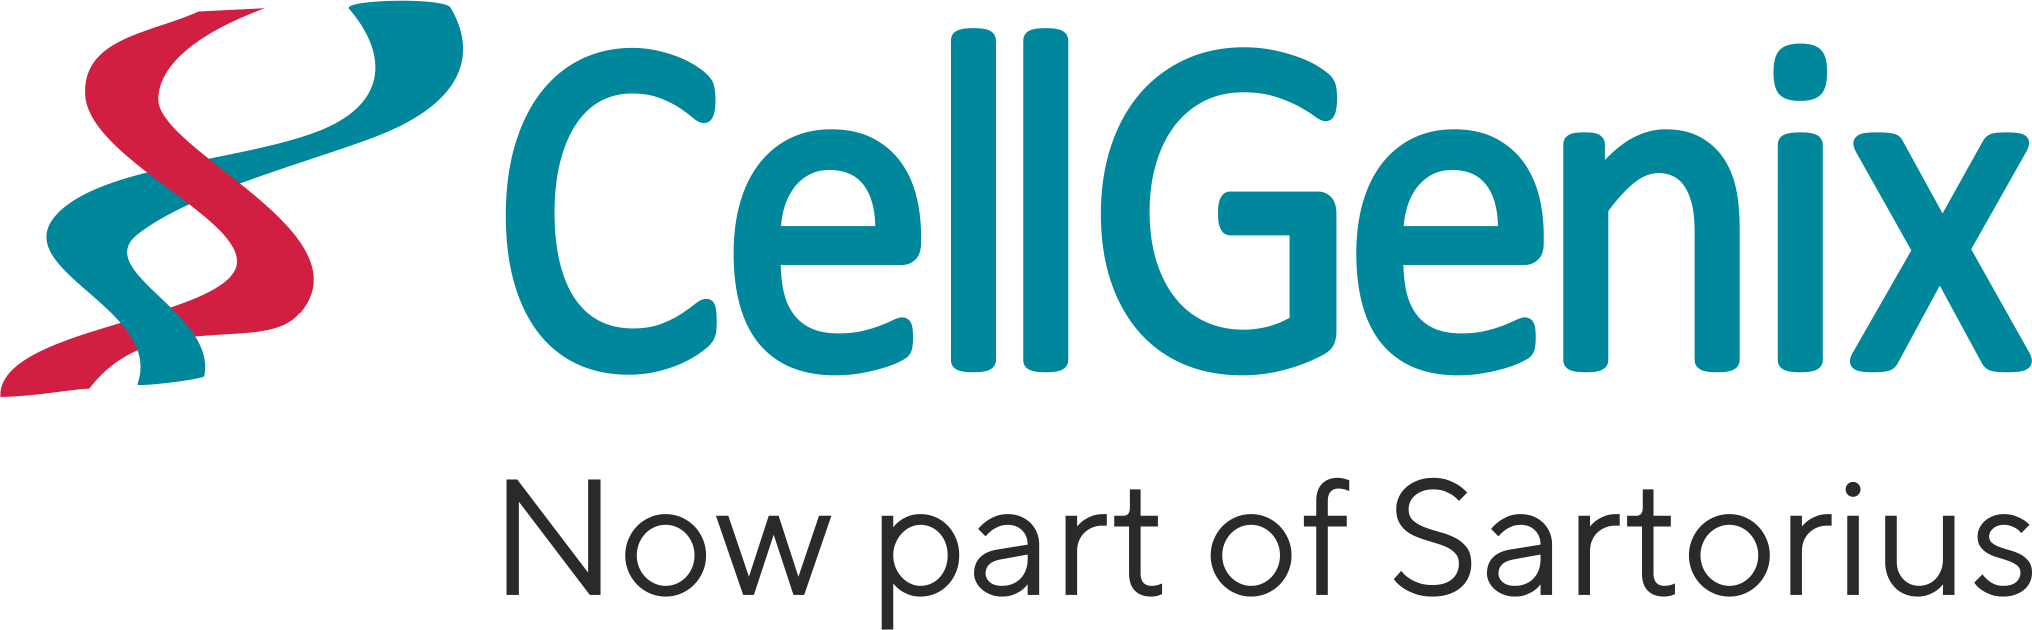 CellGenix GmbH